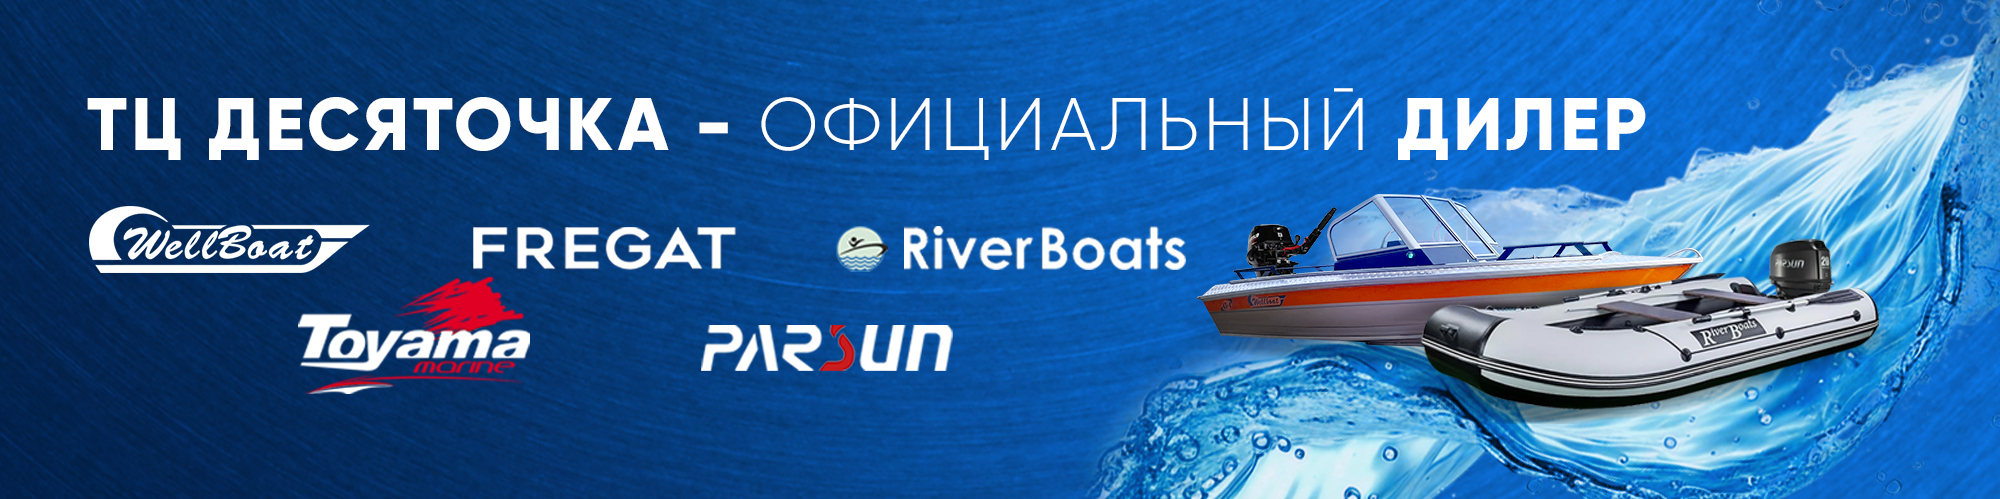 Официальный дилер Wellboat, Riverboats, Fregat, Parsun, Toyama